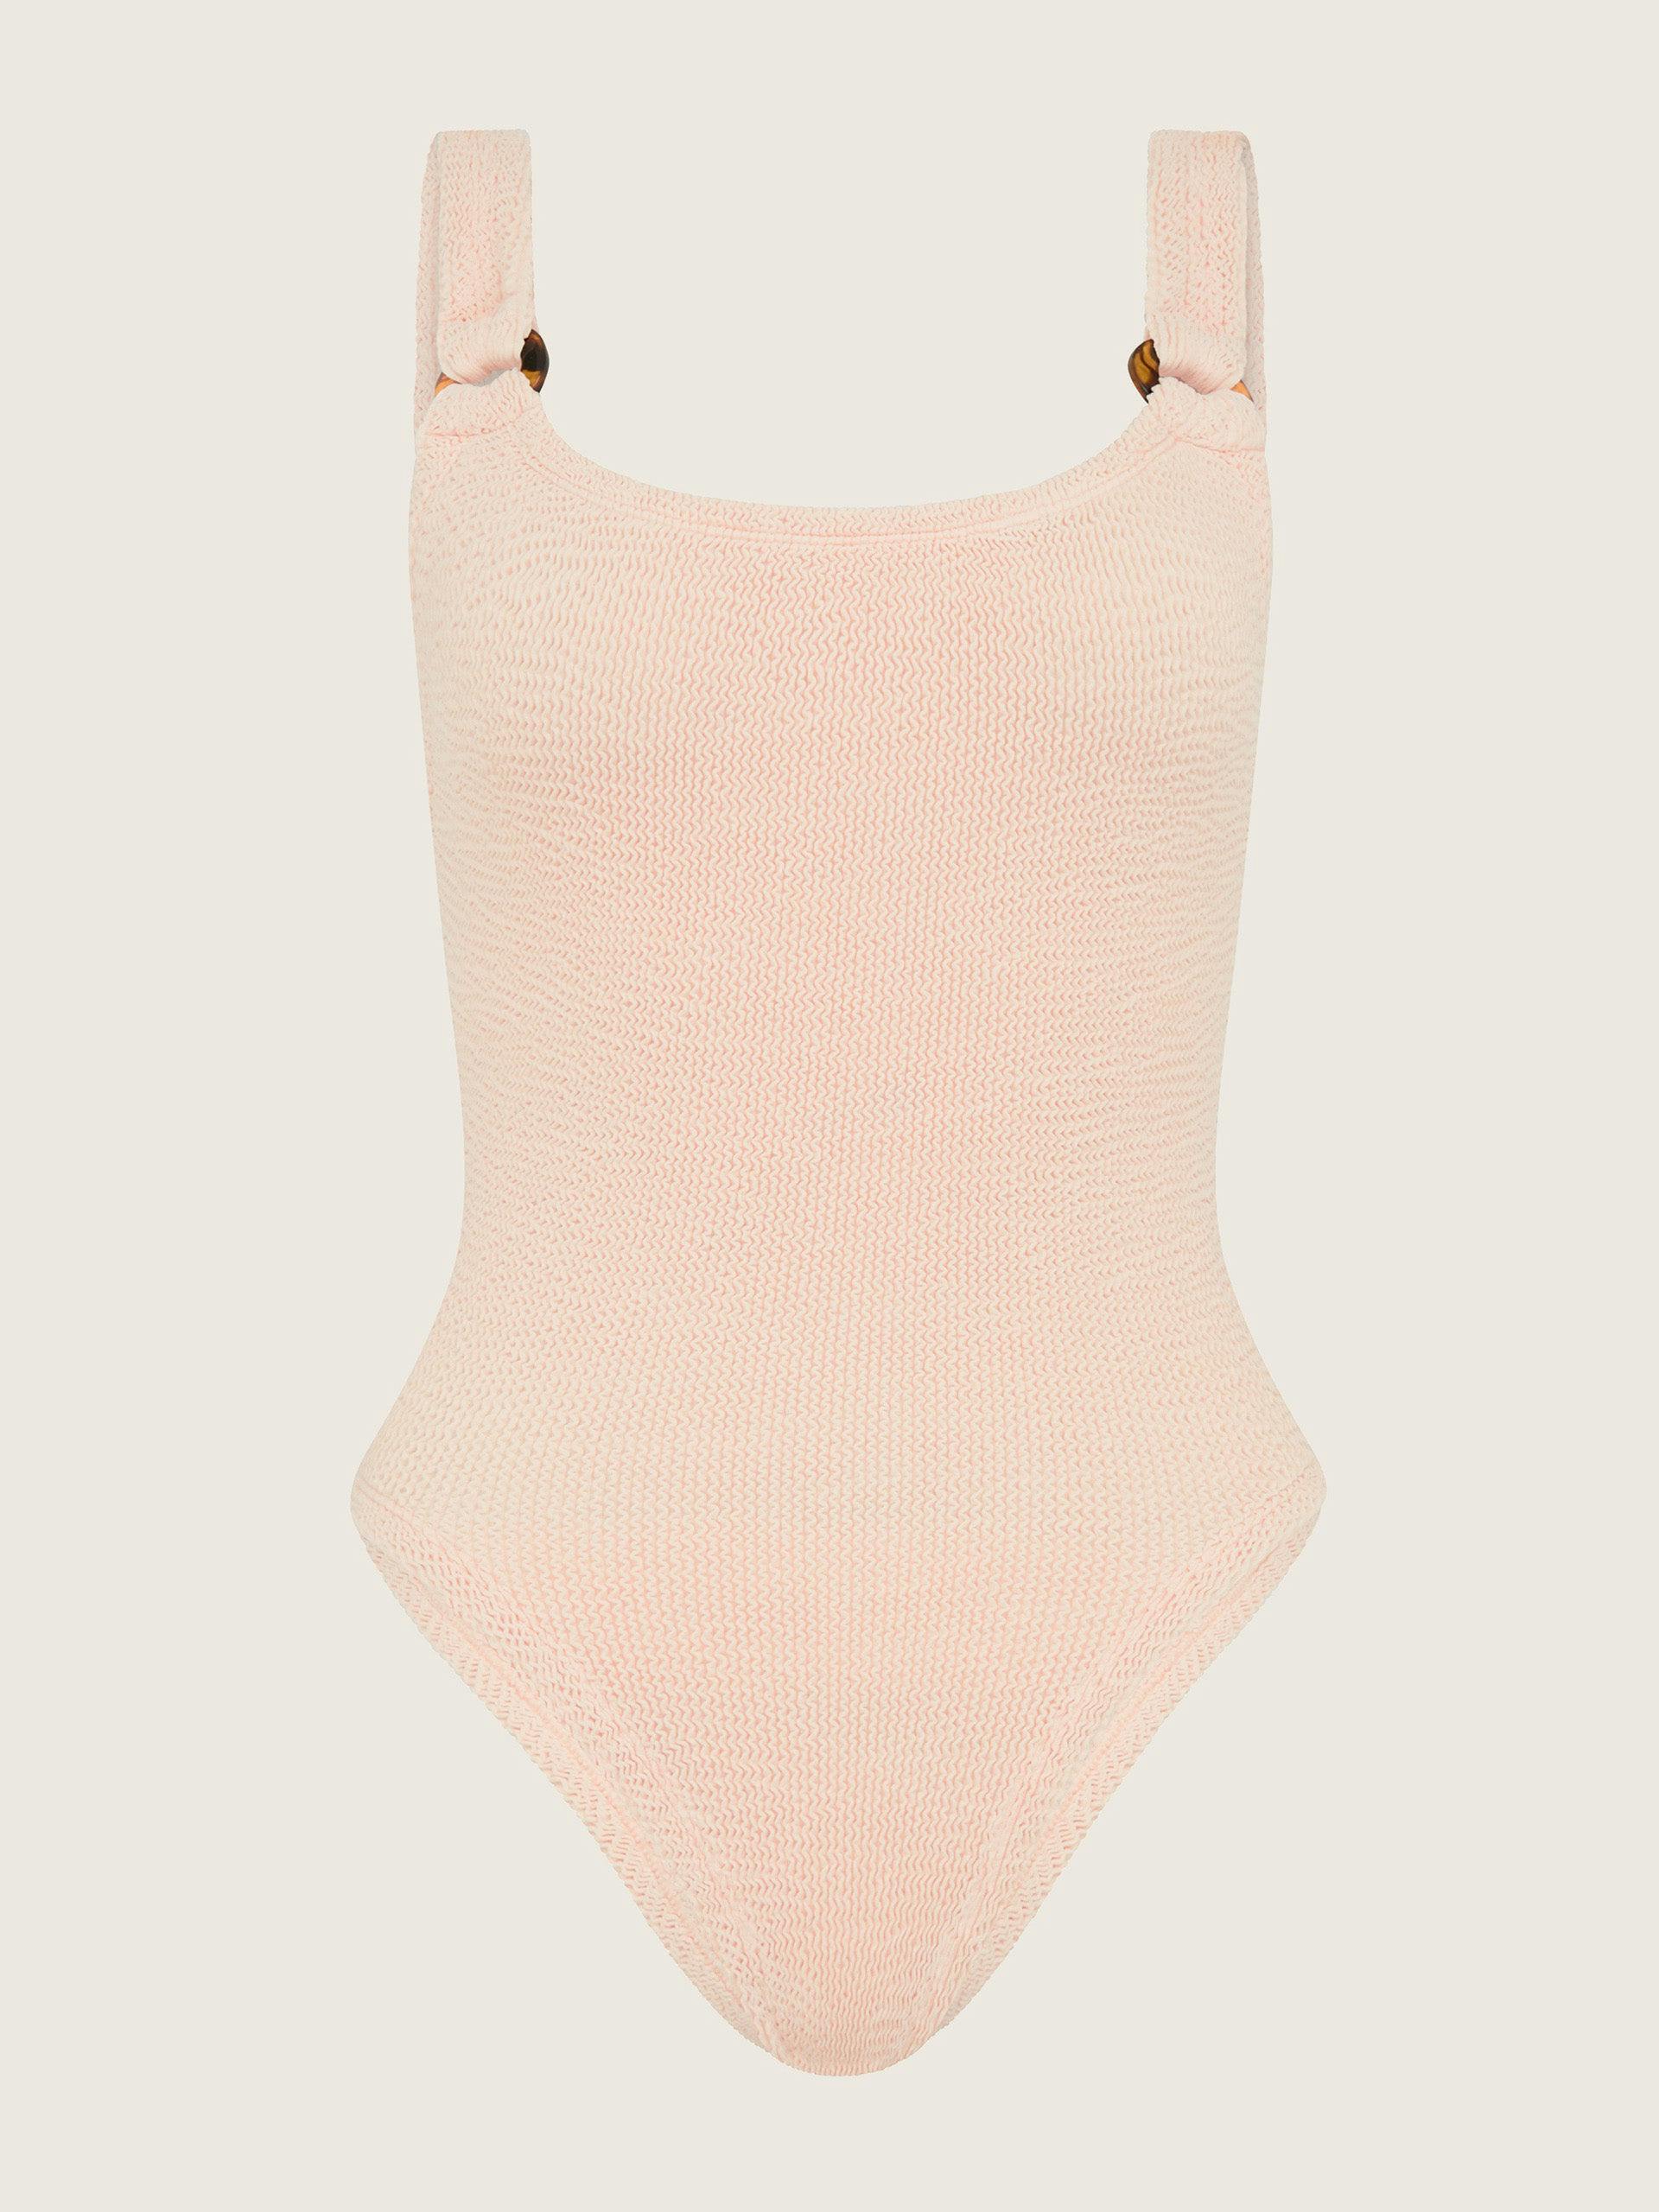 Blush pink Domino scoop swimsuit